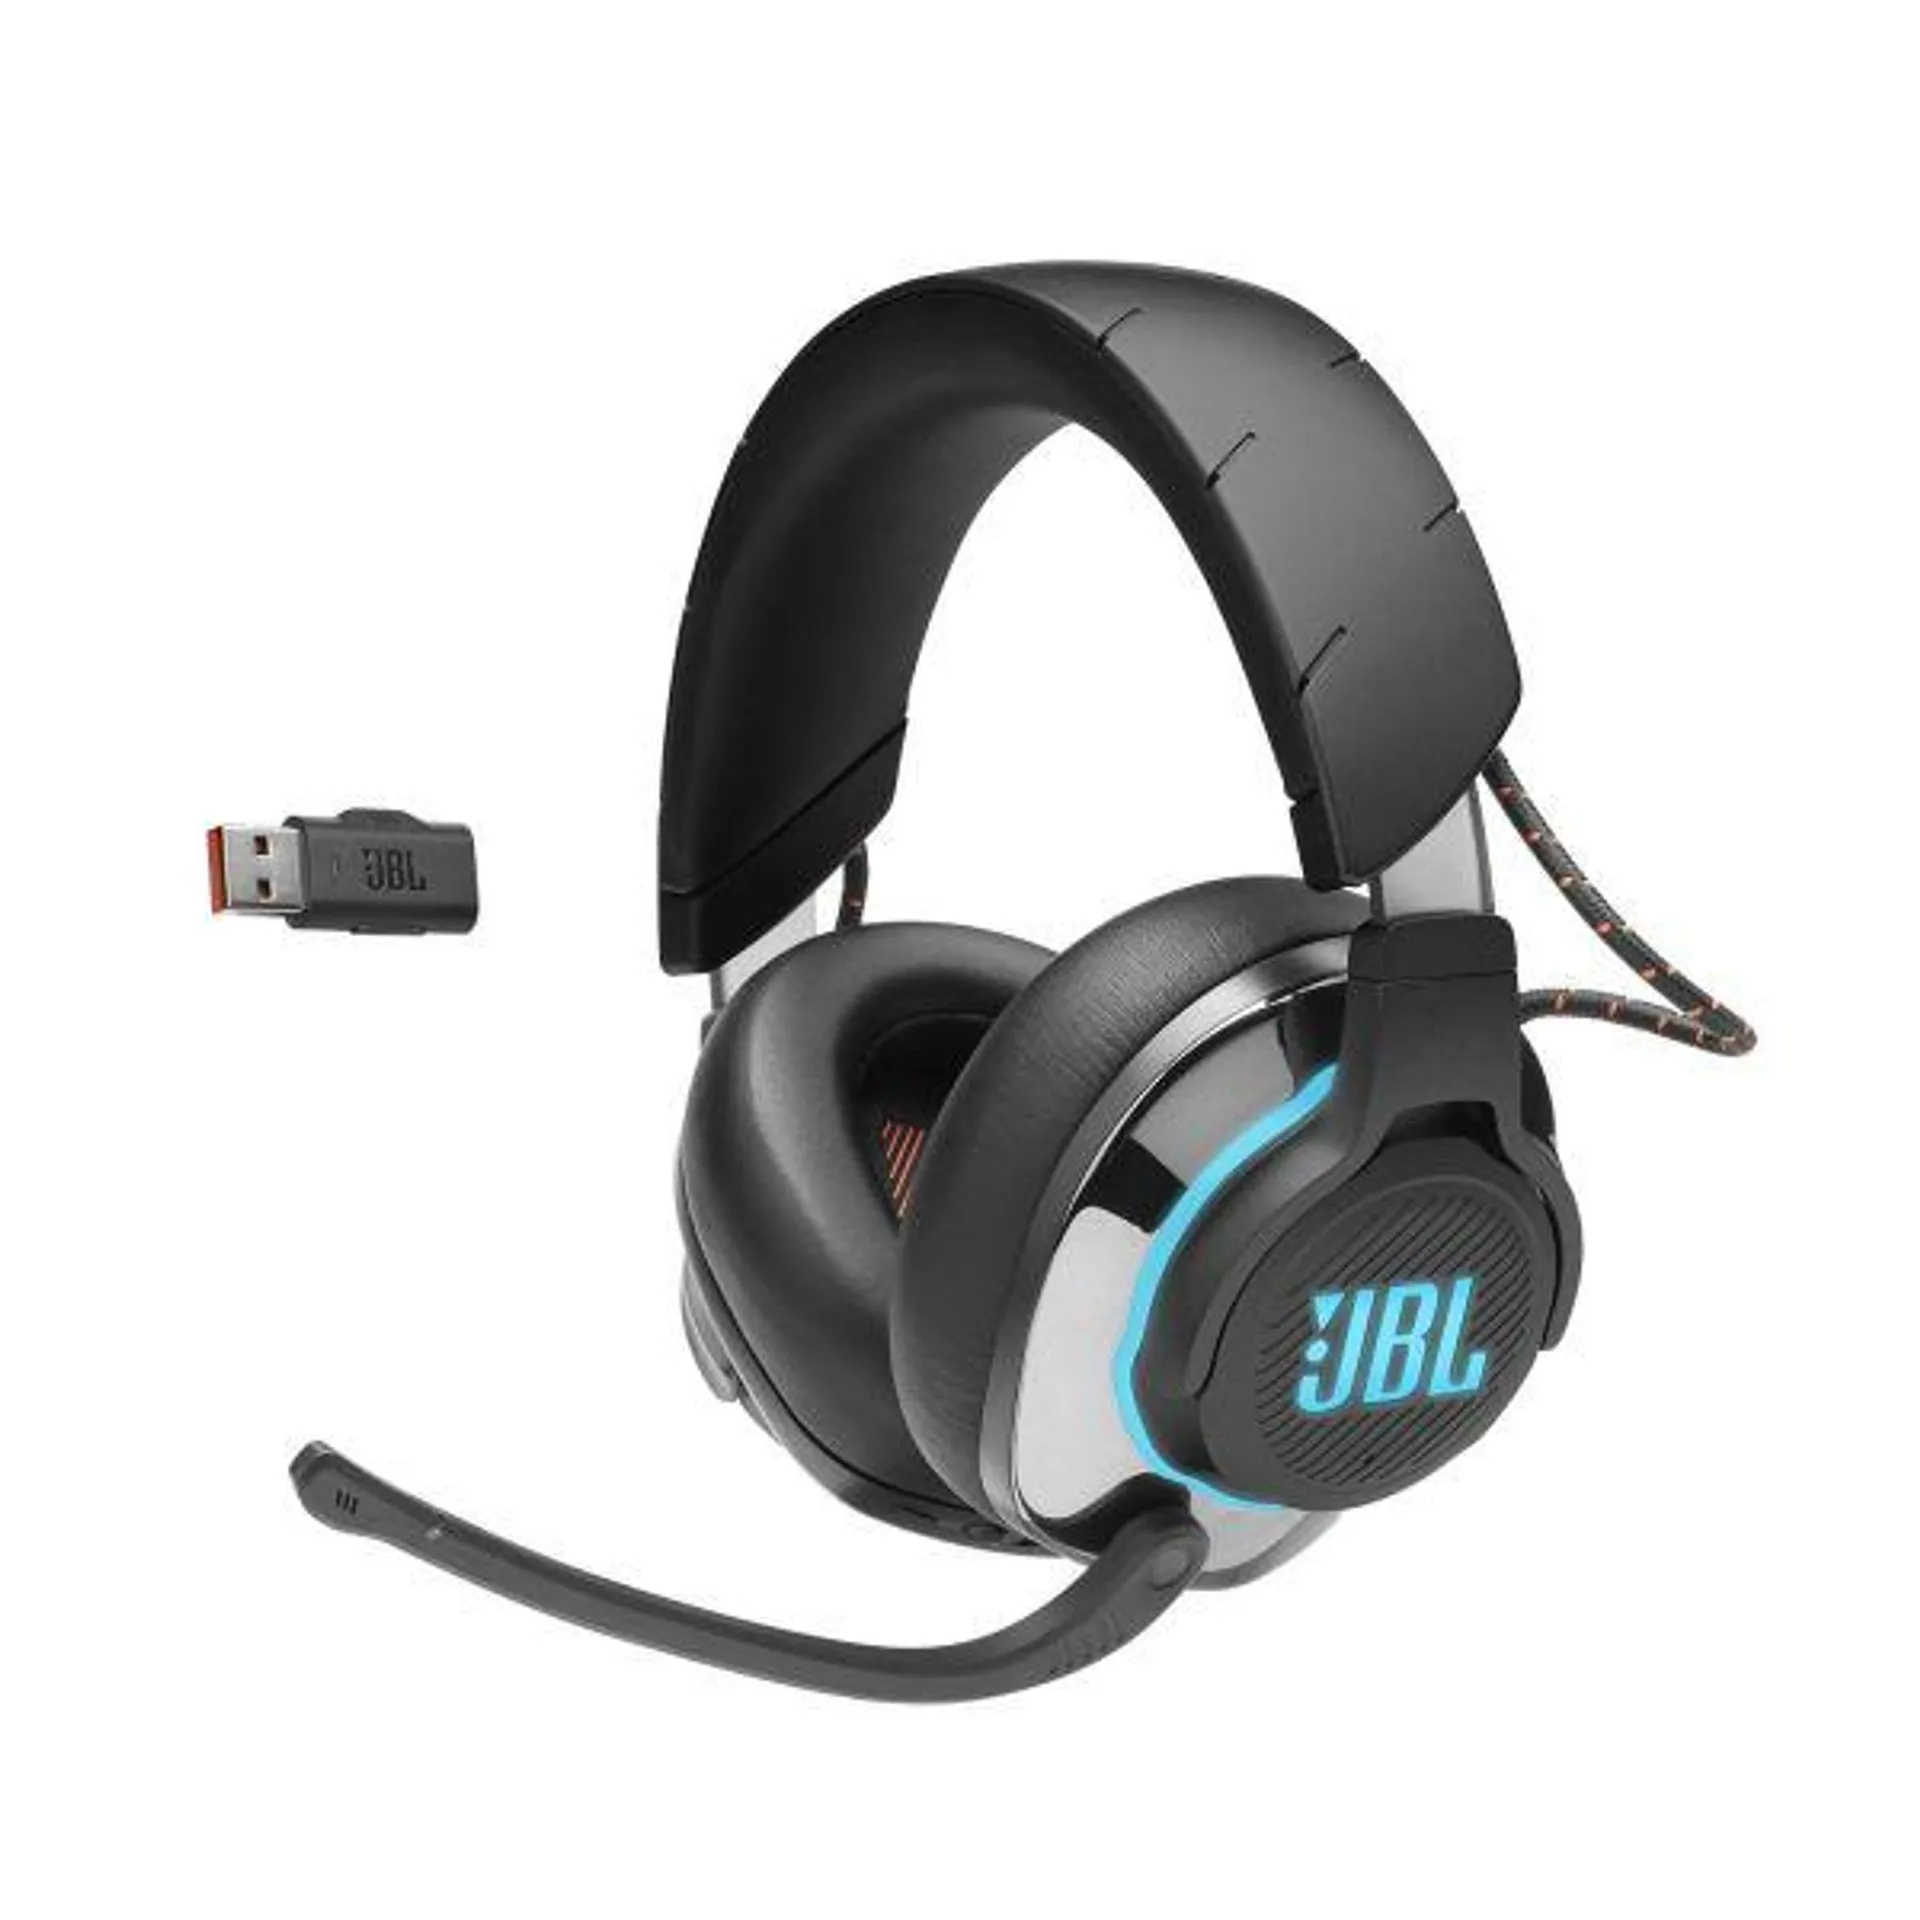 JBL Quantum 810 Wireless Noise-Canceling Over-Ear Gaming Headset - Black